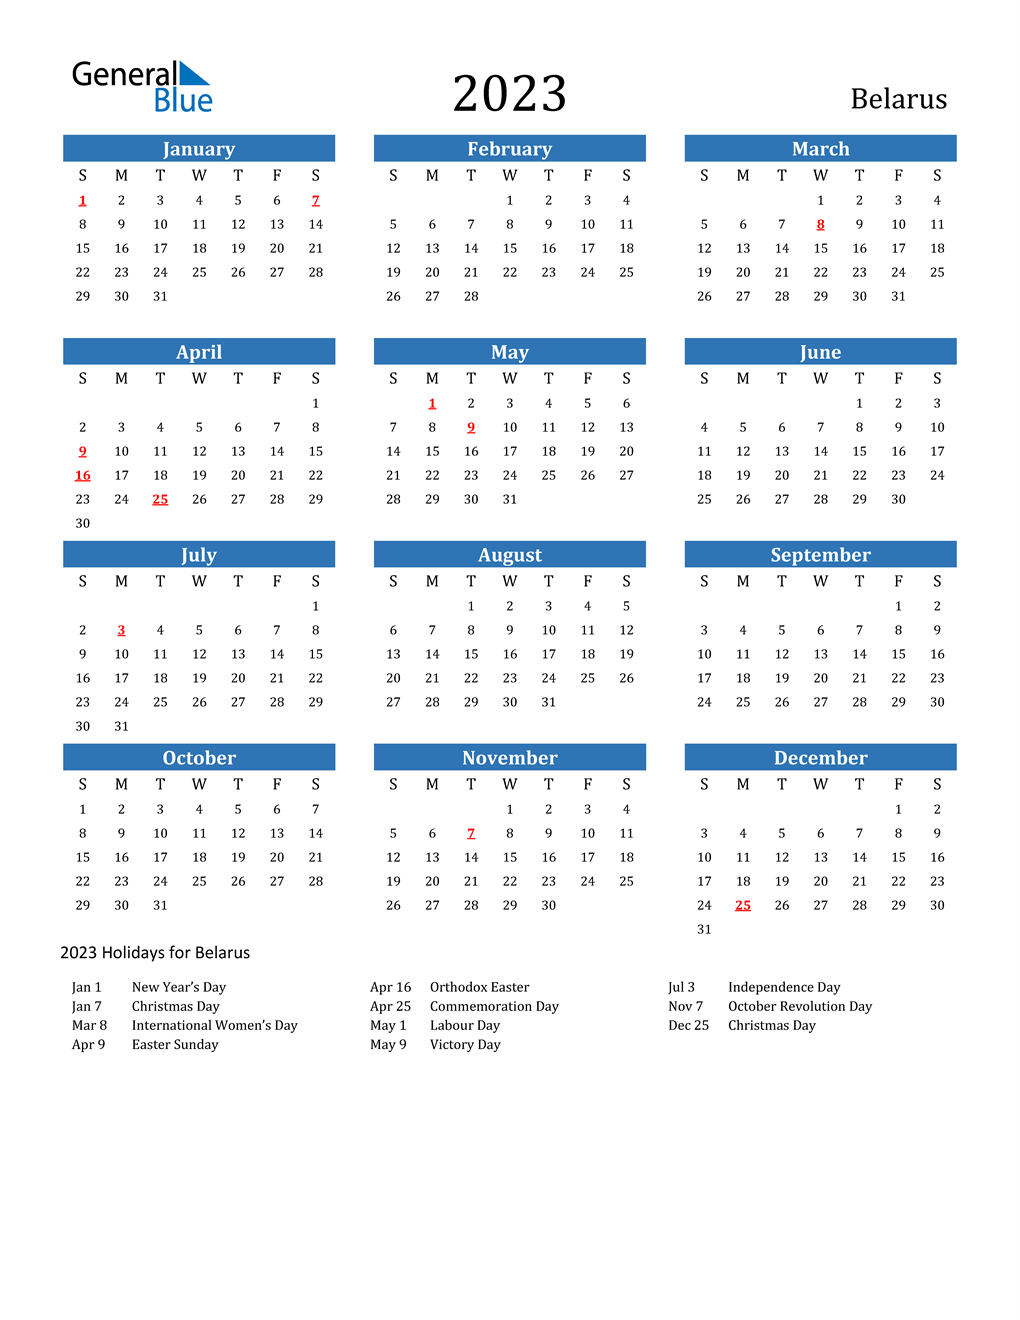 Ysu Spring 2023 Calendar 2023 Belarus Calendar With Holidays